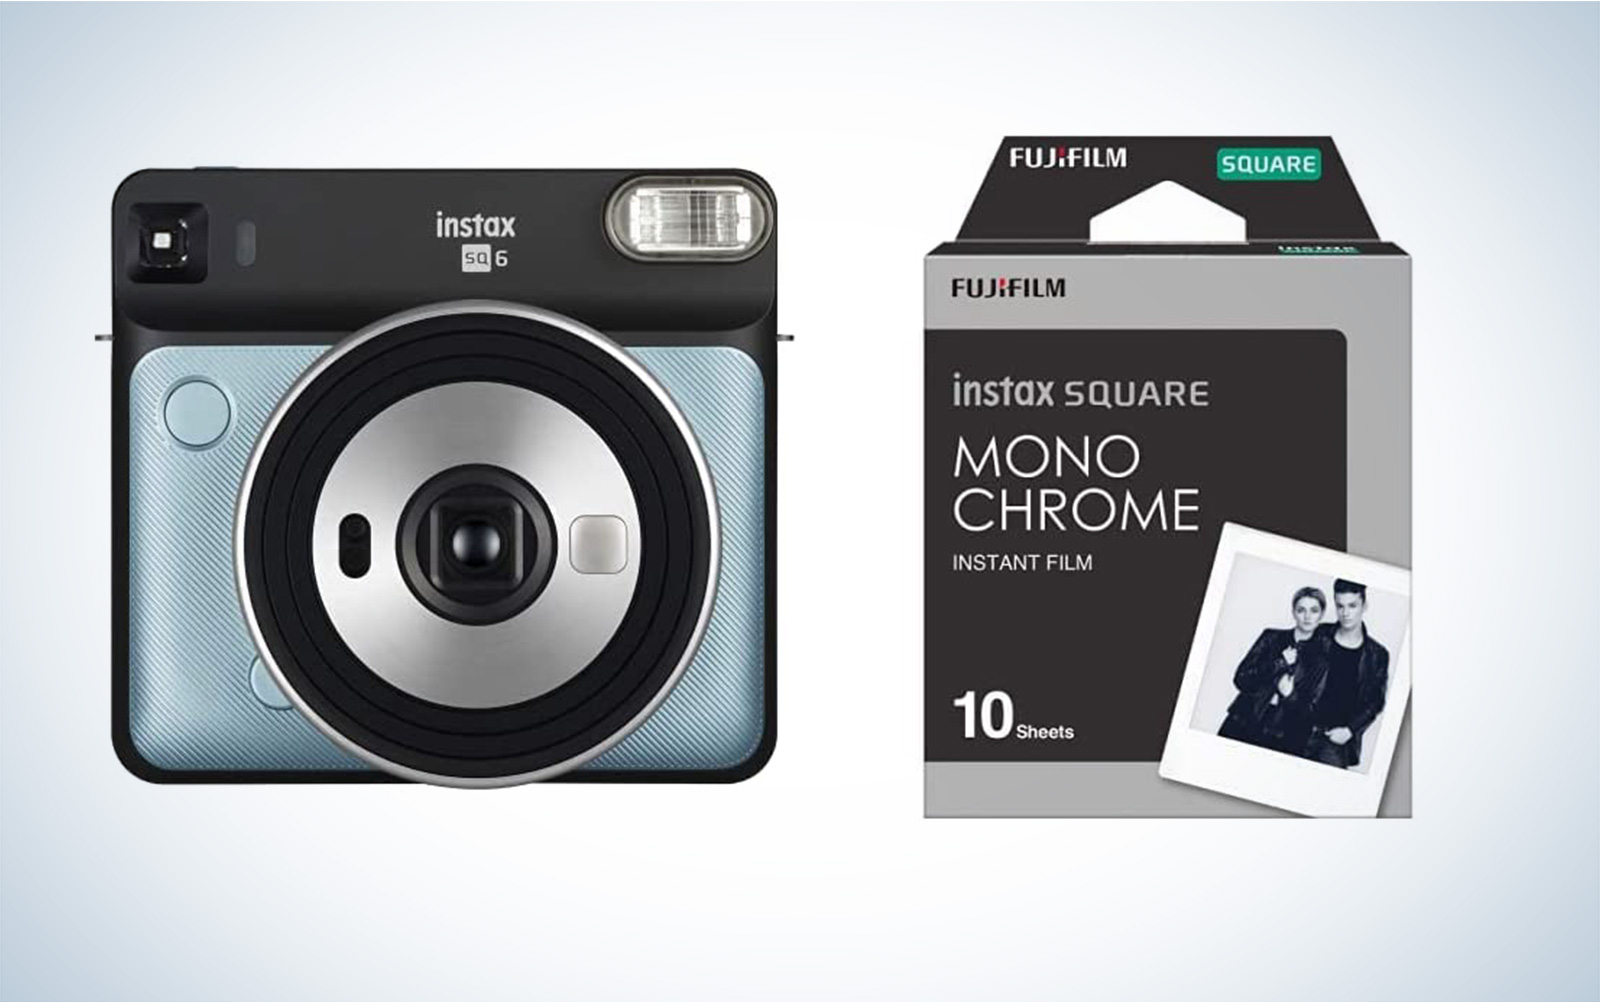  Fujifilm Instax Square SQ6 - Instant Film Camera